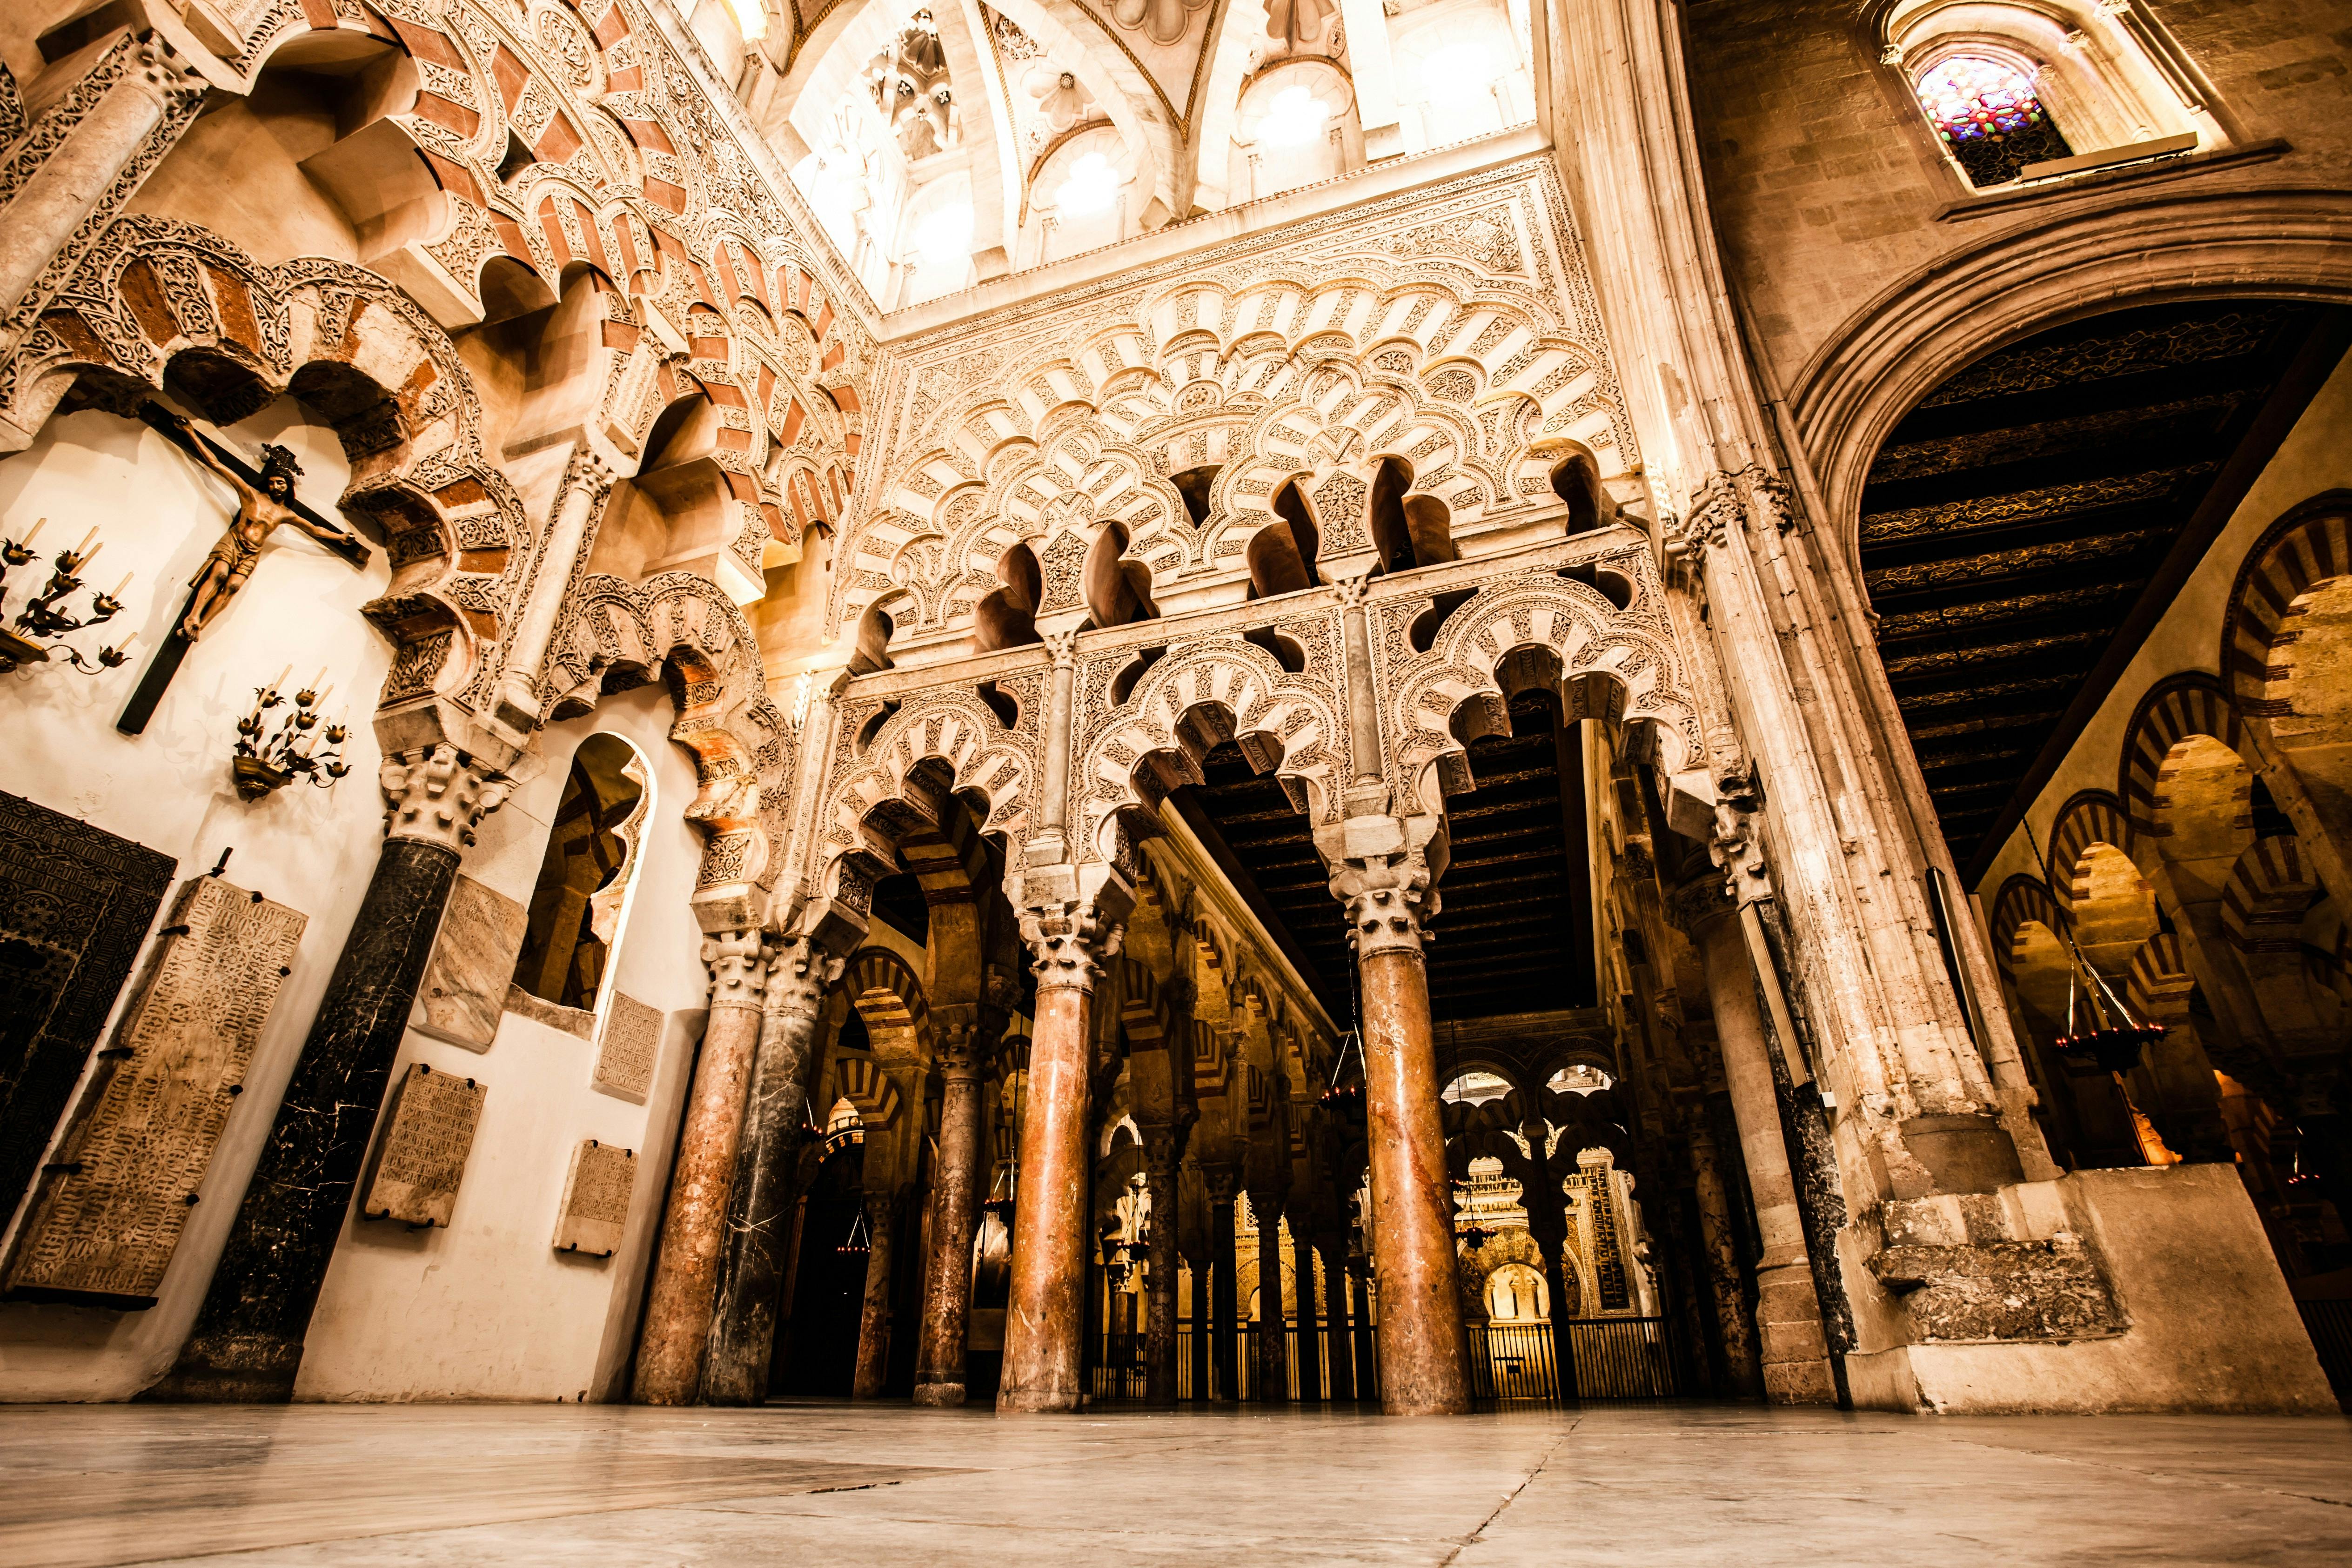 Mezquita-Catedral de Córdoba mit offizieller Führung